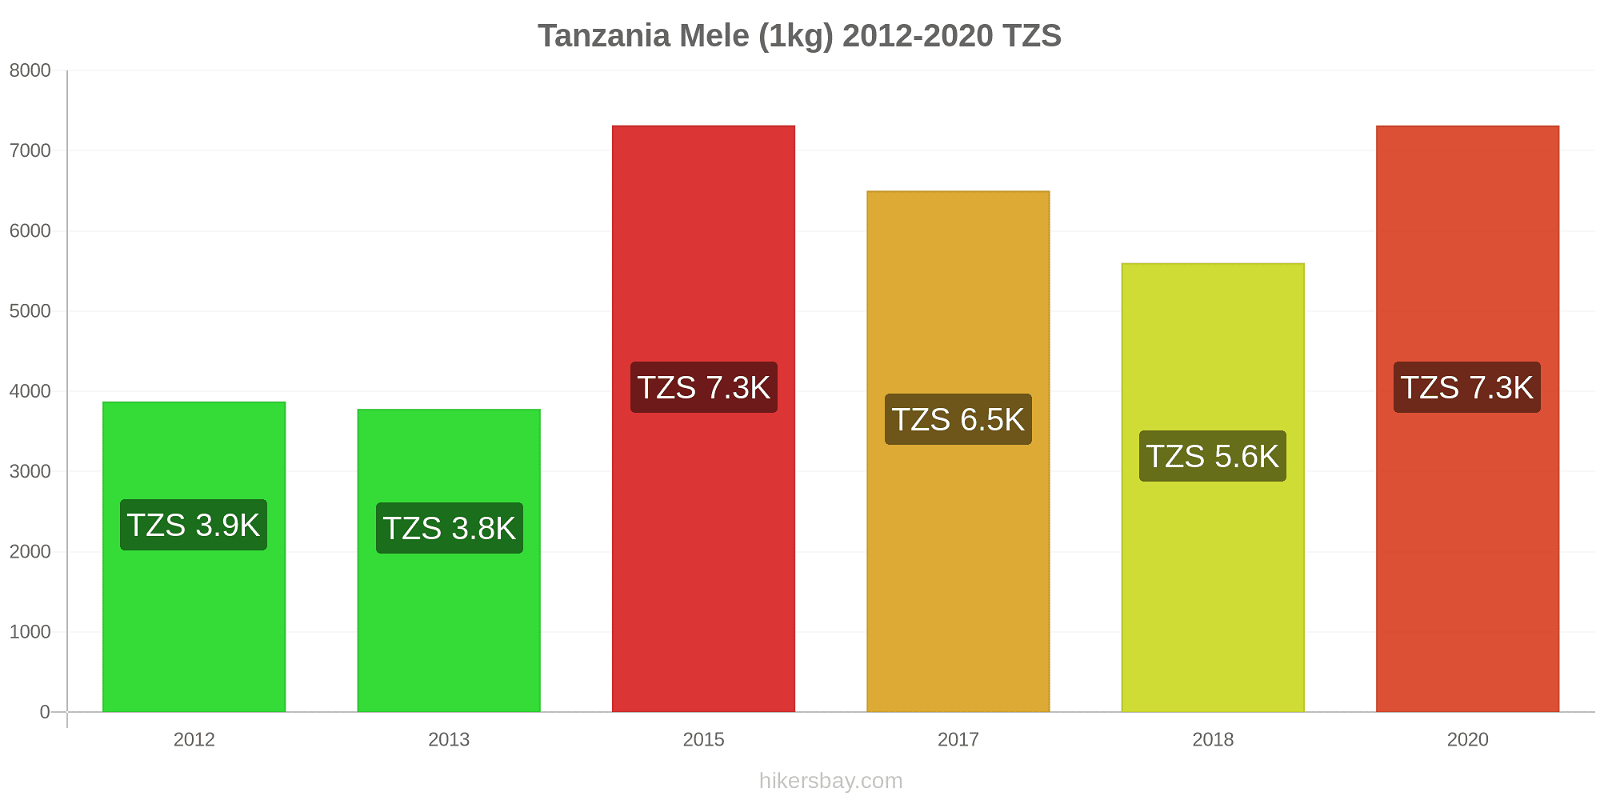 Tanzania variazioni di prezzo Mele (1kg) hikersbay.com